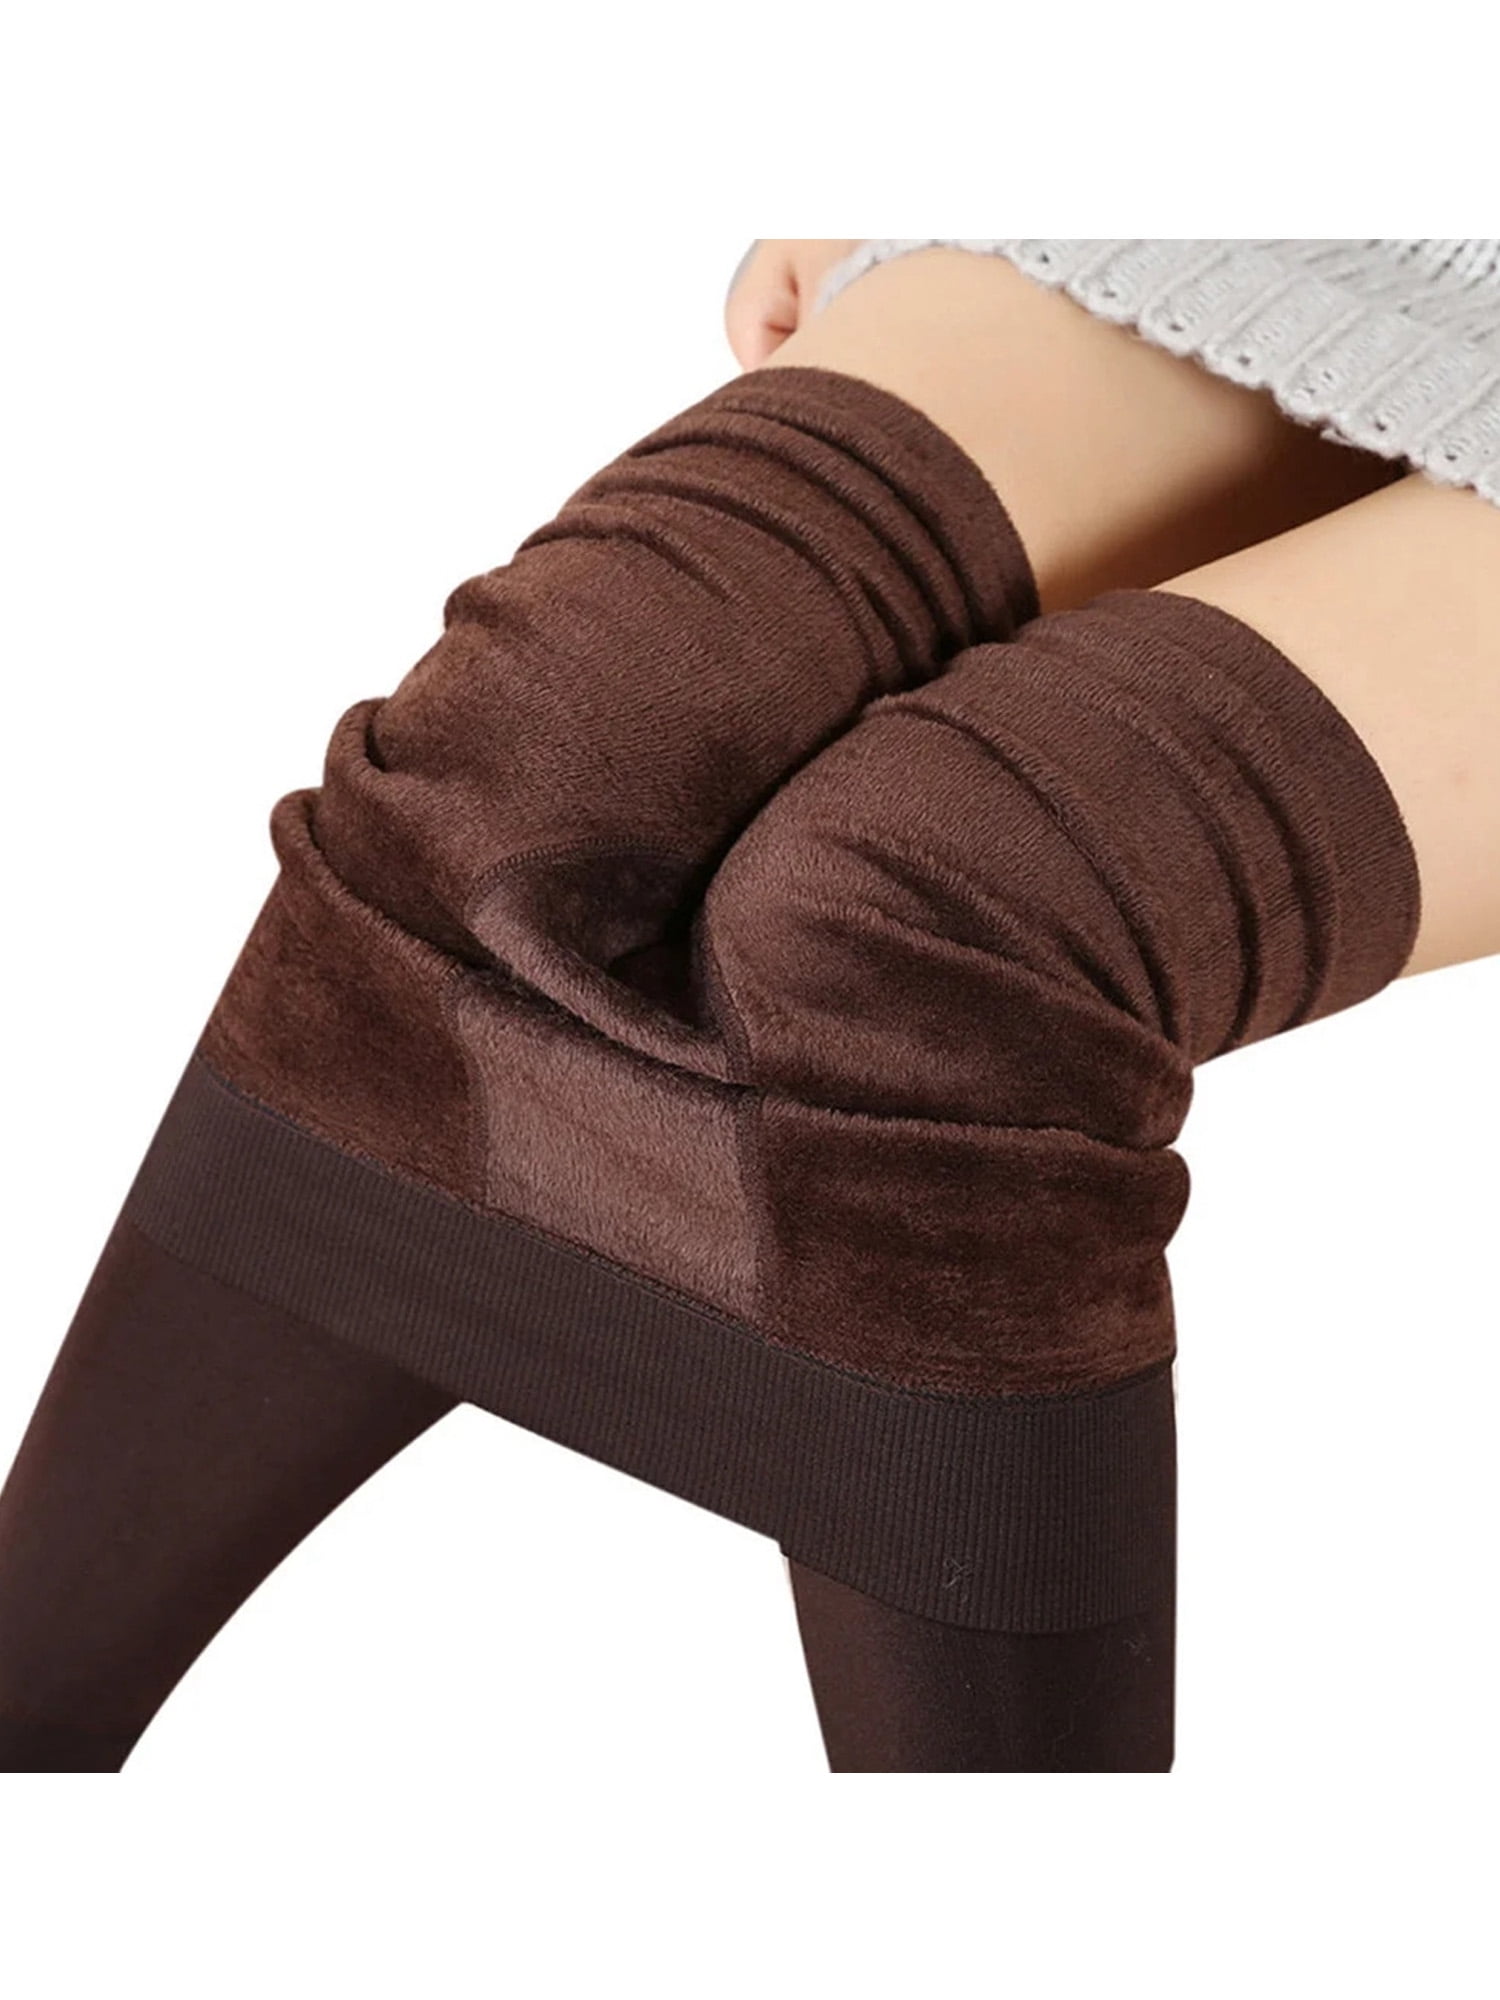 Women's Striped Leggings Chocolate Bolf 020A CZEKOLADOWY